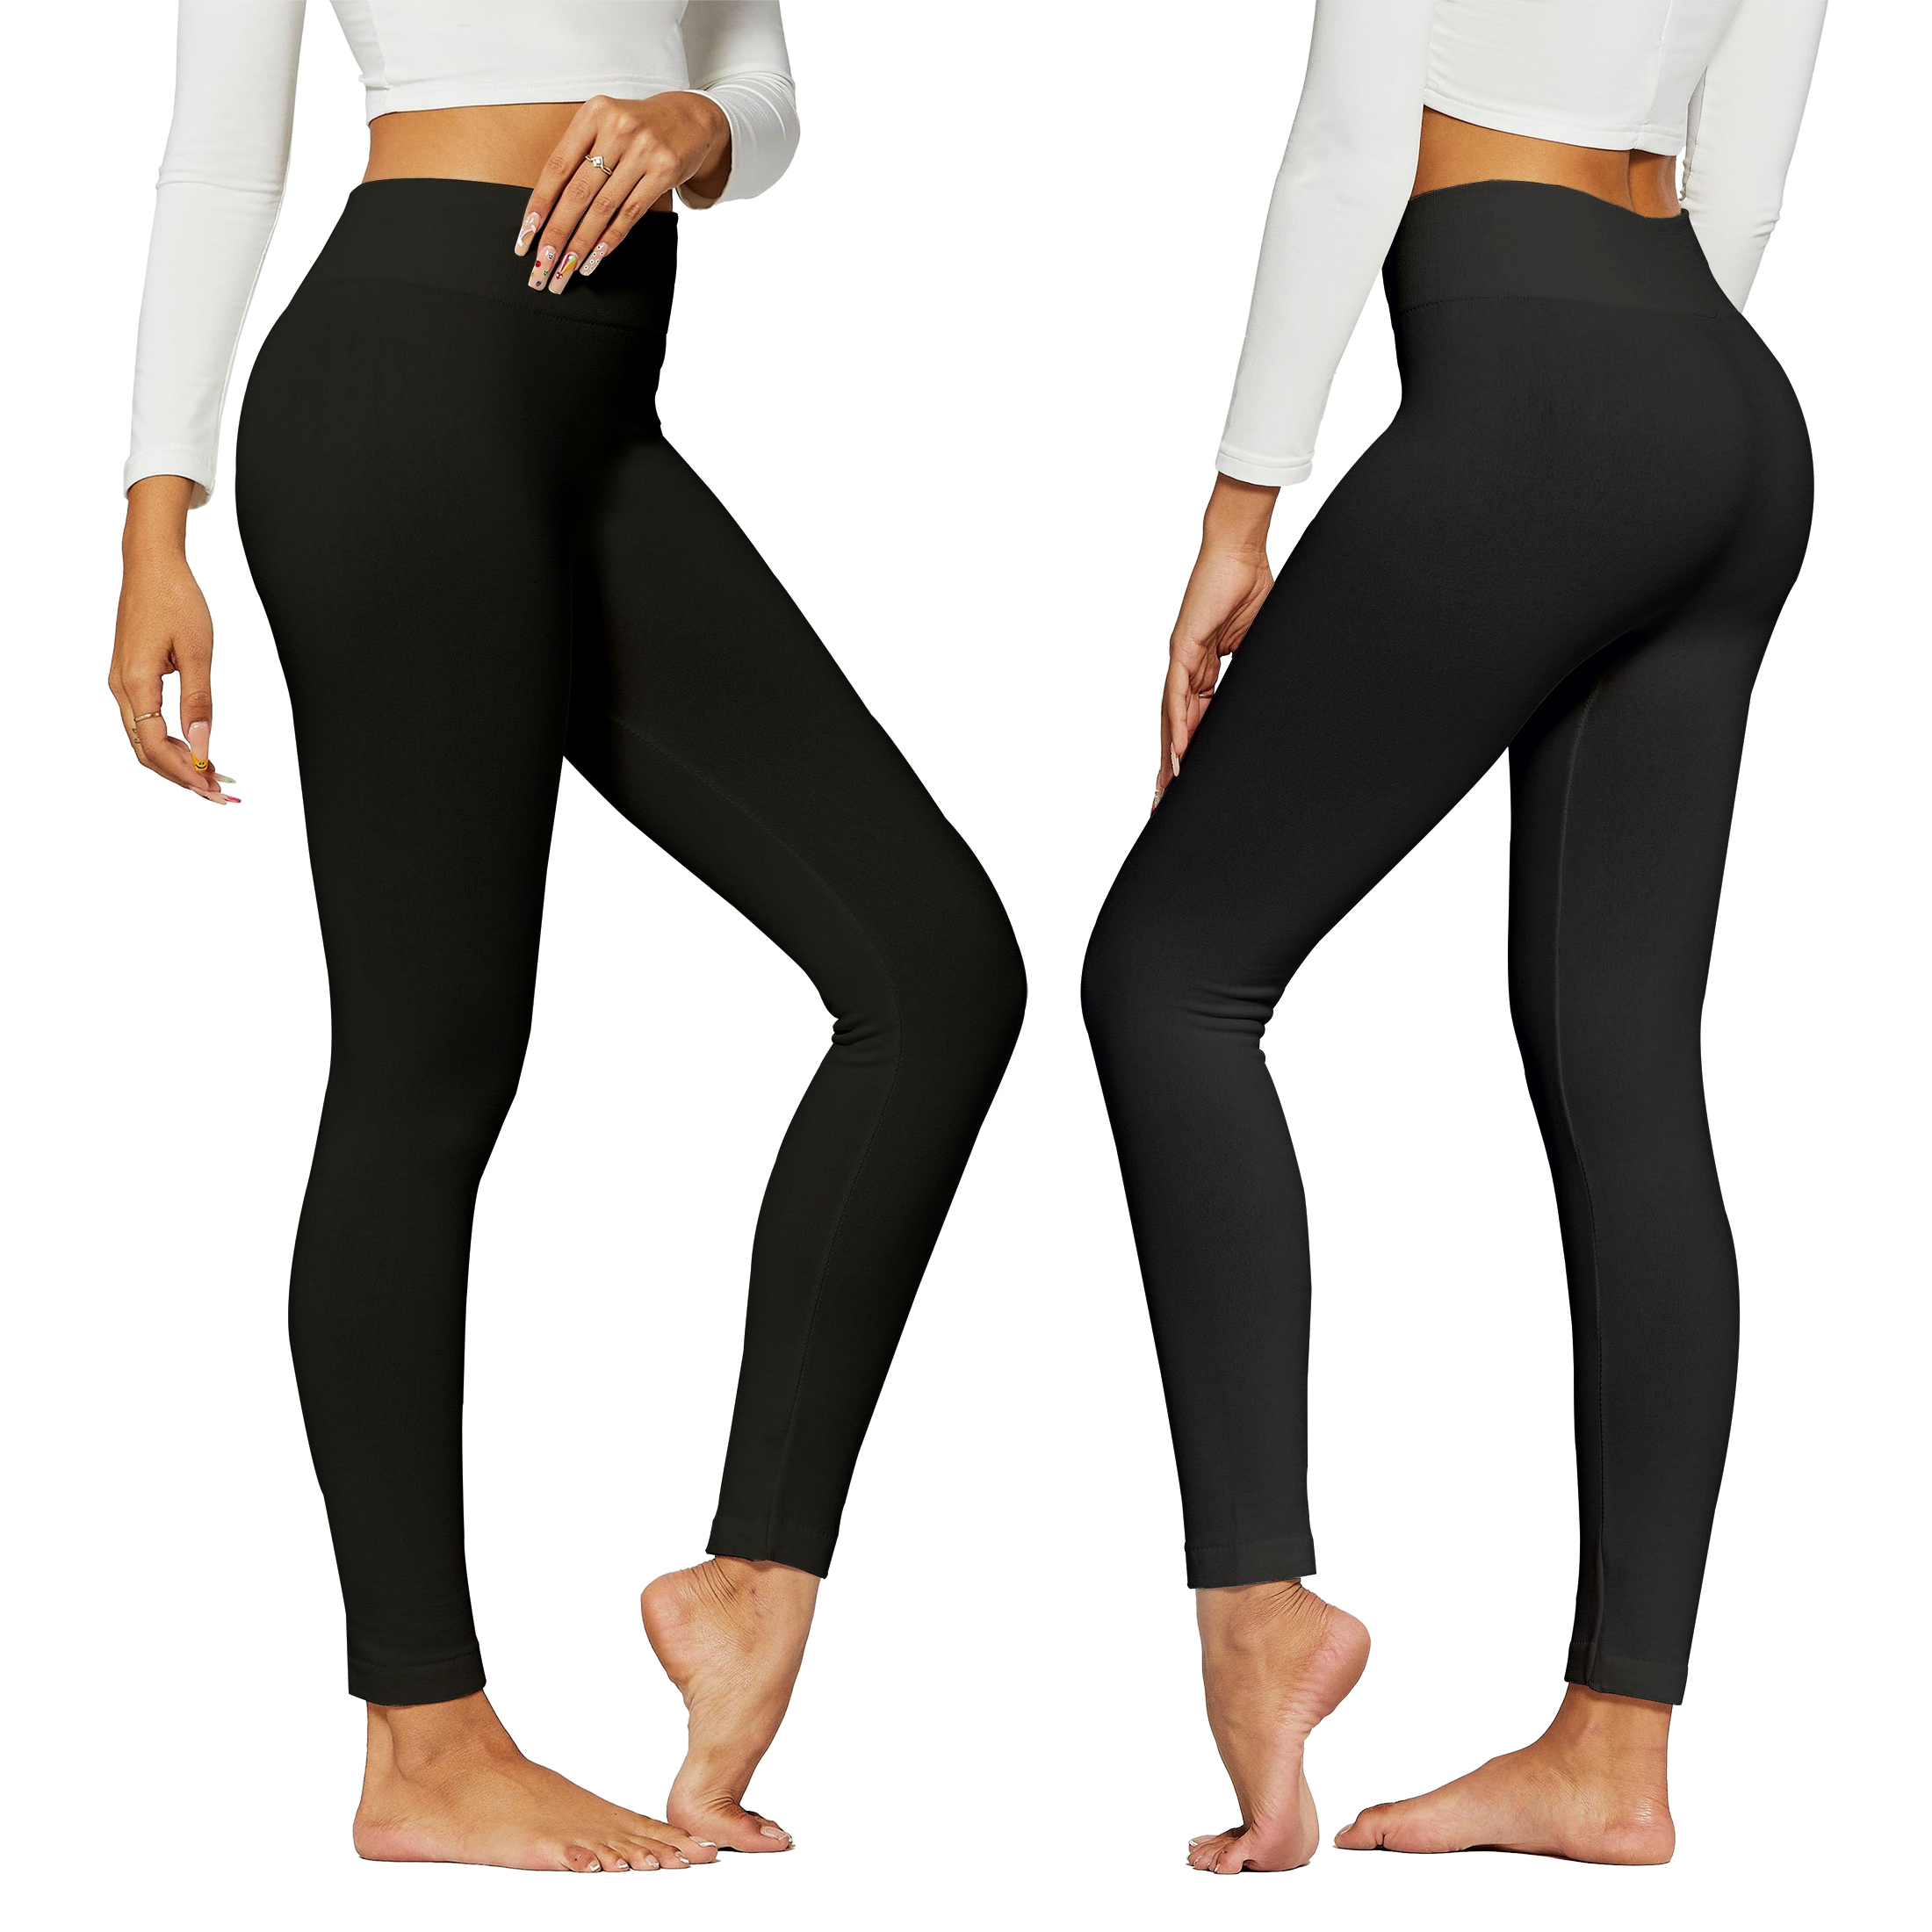 Women's Premium Quality High-Waist Fleece Lined Leggings (S-4X) - Black, 3X/4X